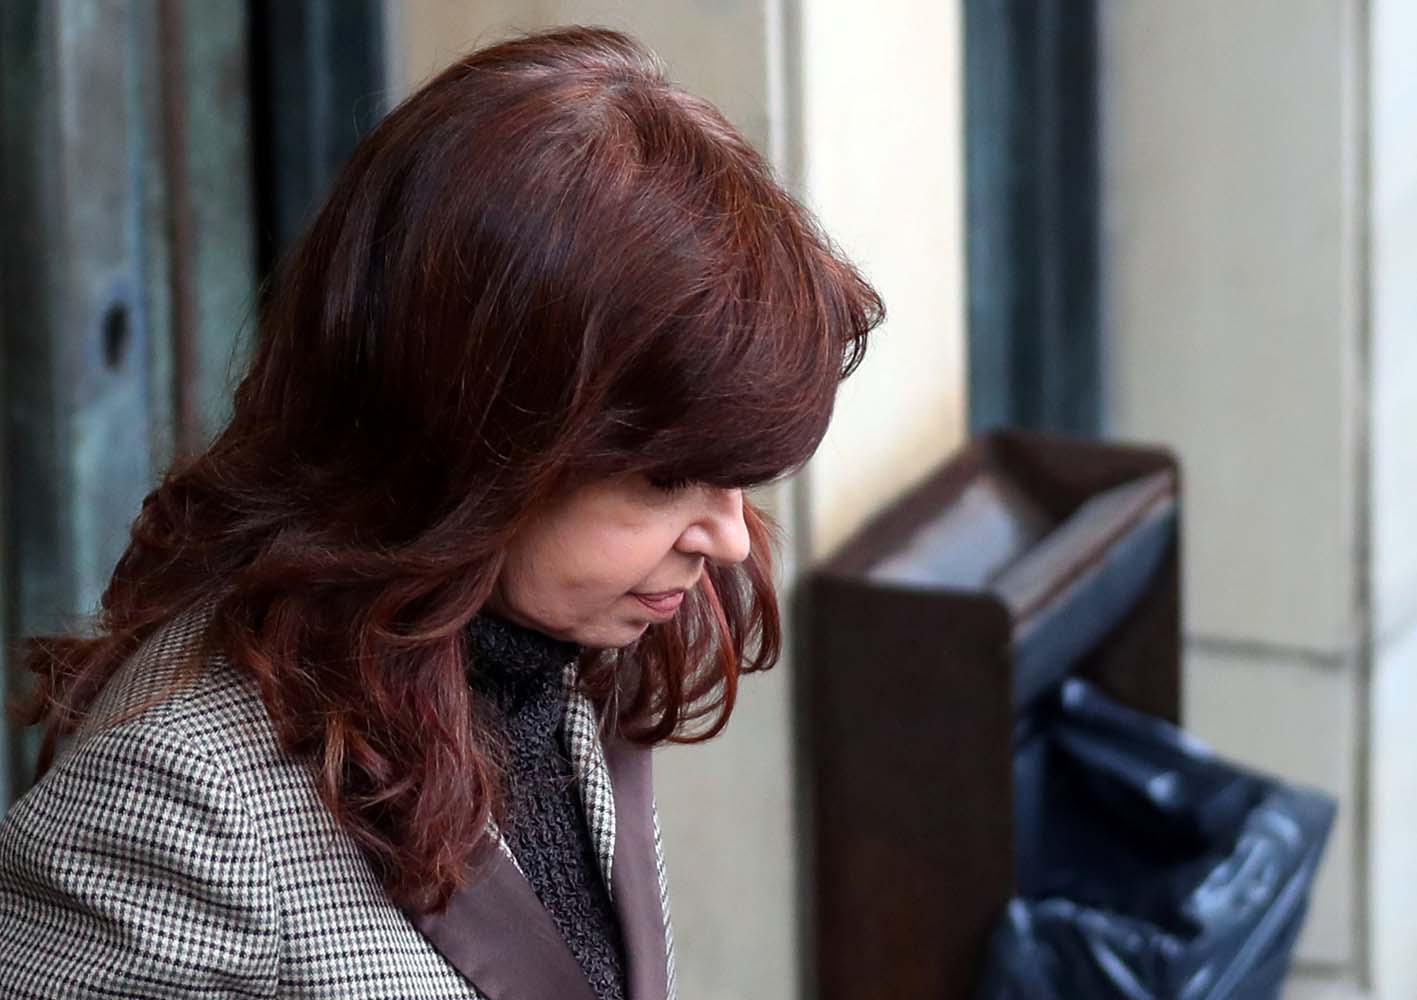 Un fiscal argentino pide ratificar la orden de detención a Cristina Fernández